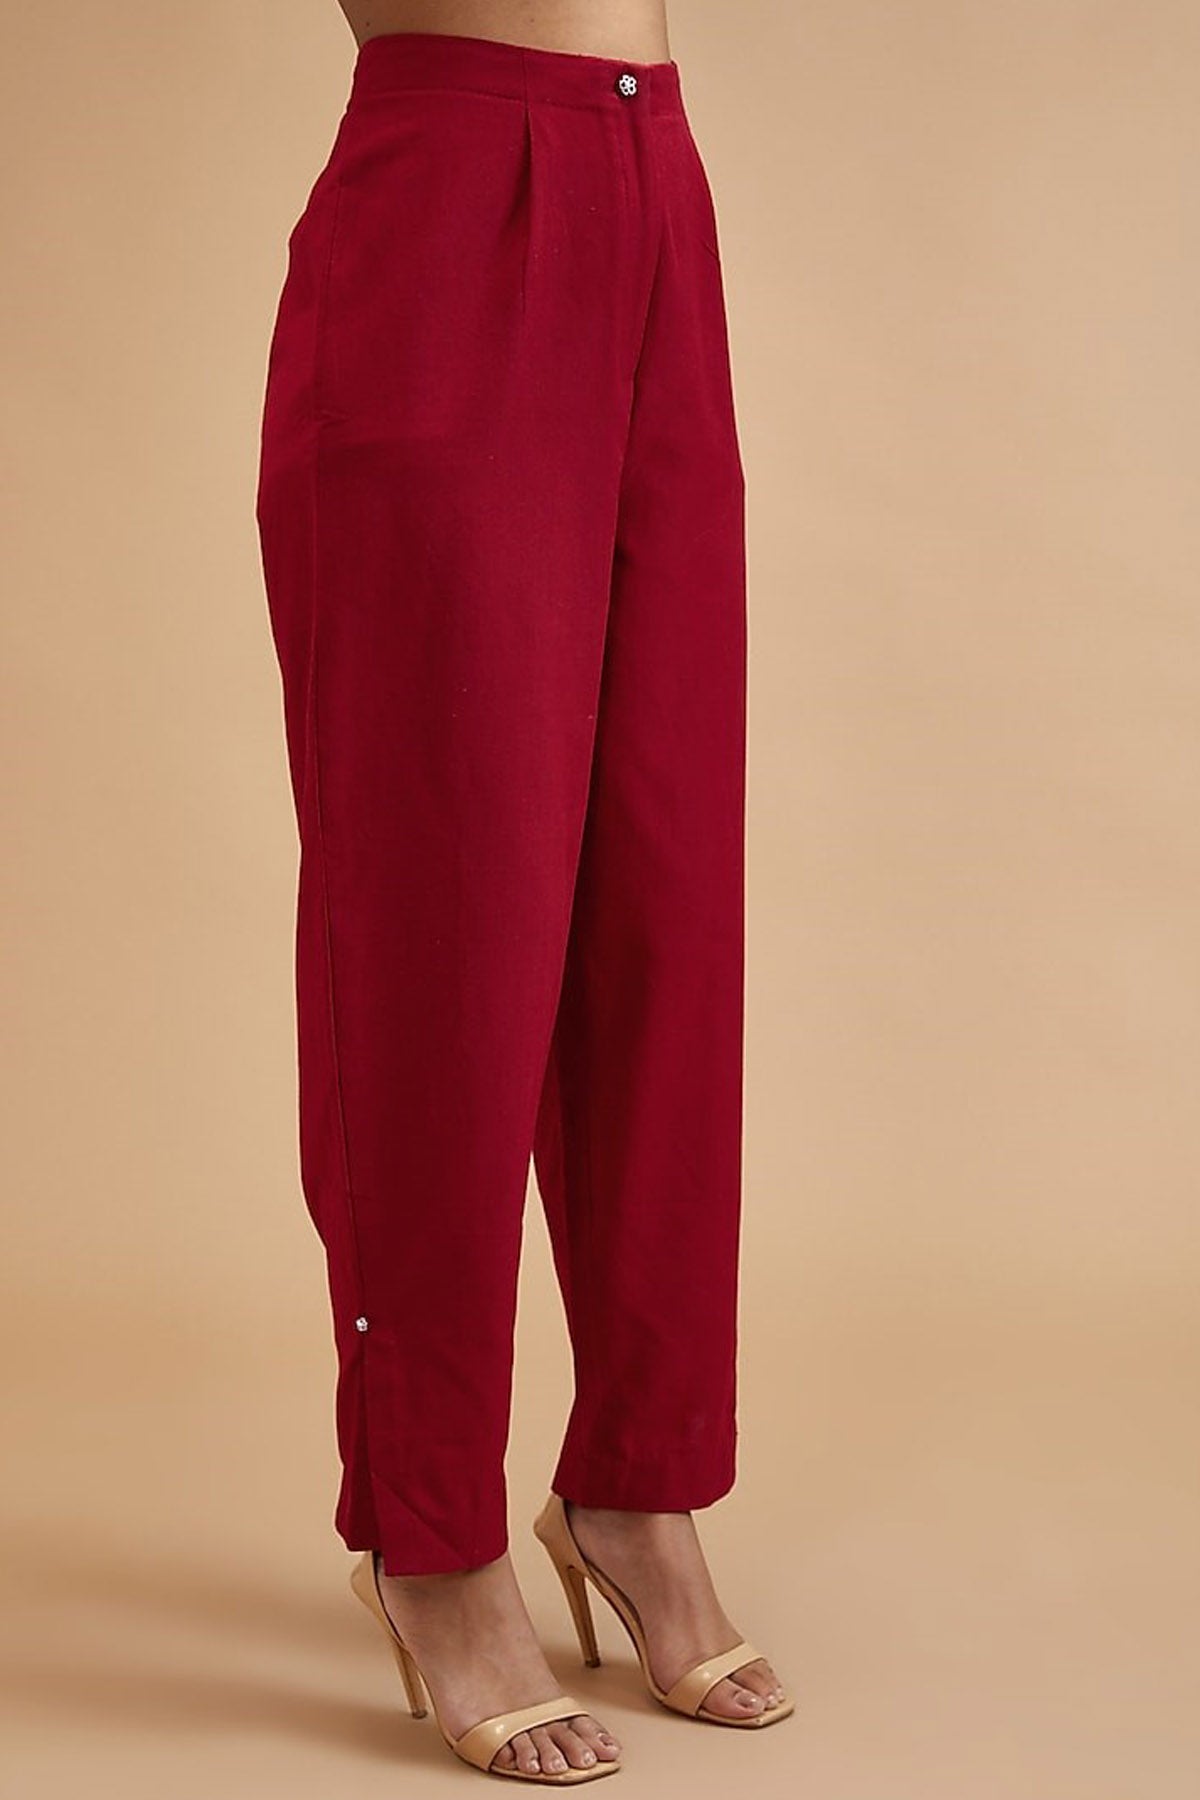 Scarlet Red Handloom Cotton Pants